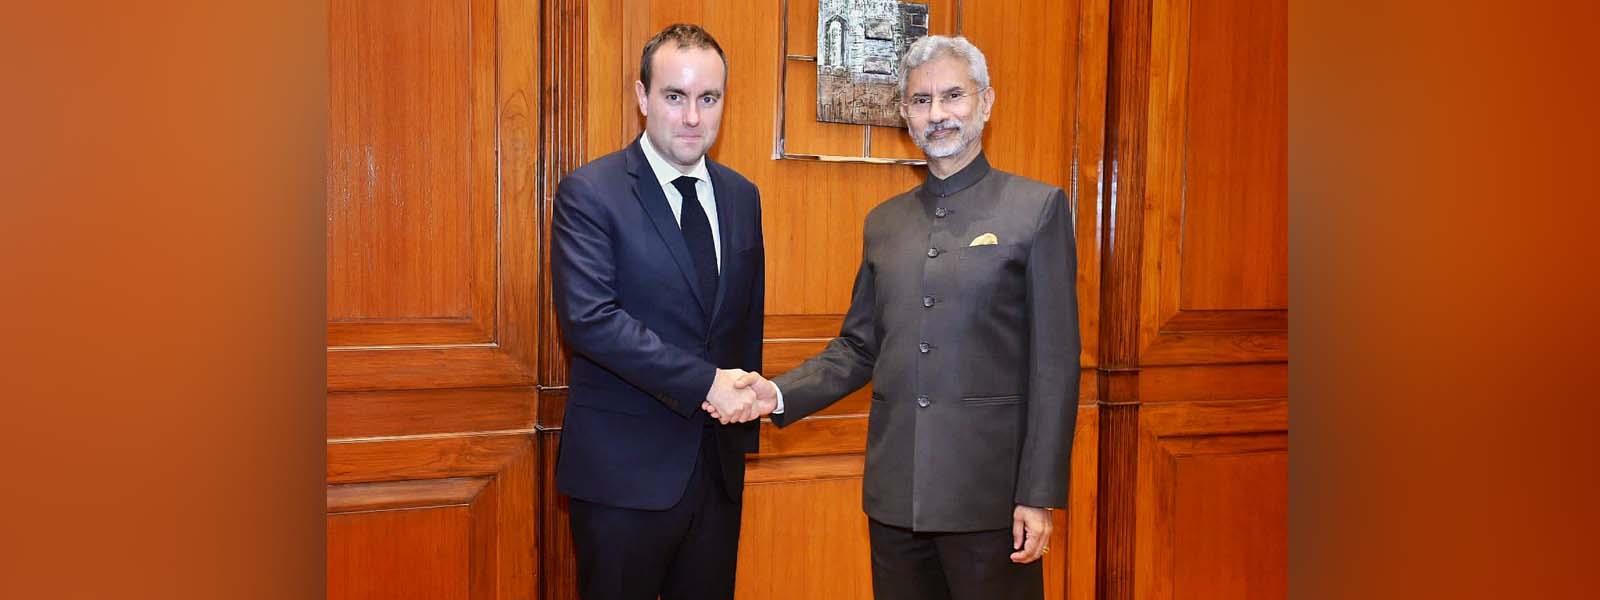 External Affairs Minister Dr. S. Jaishankar met H. E. Mr. Sébastien Lecornu, Minister of the Armed Forces of France in New Delhi